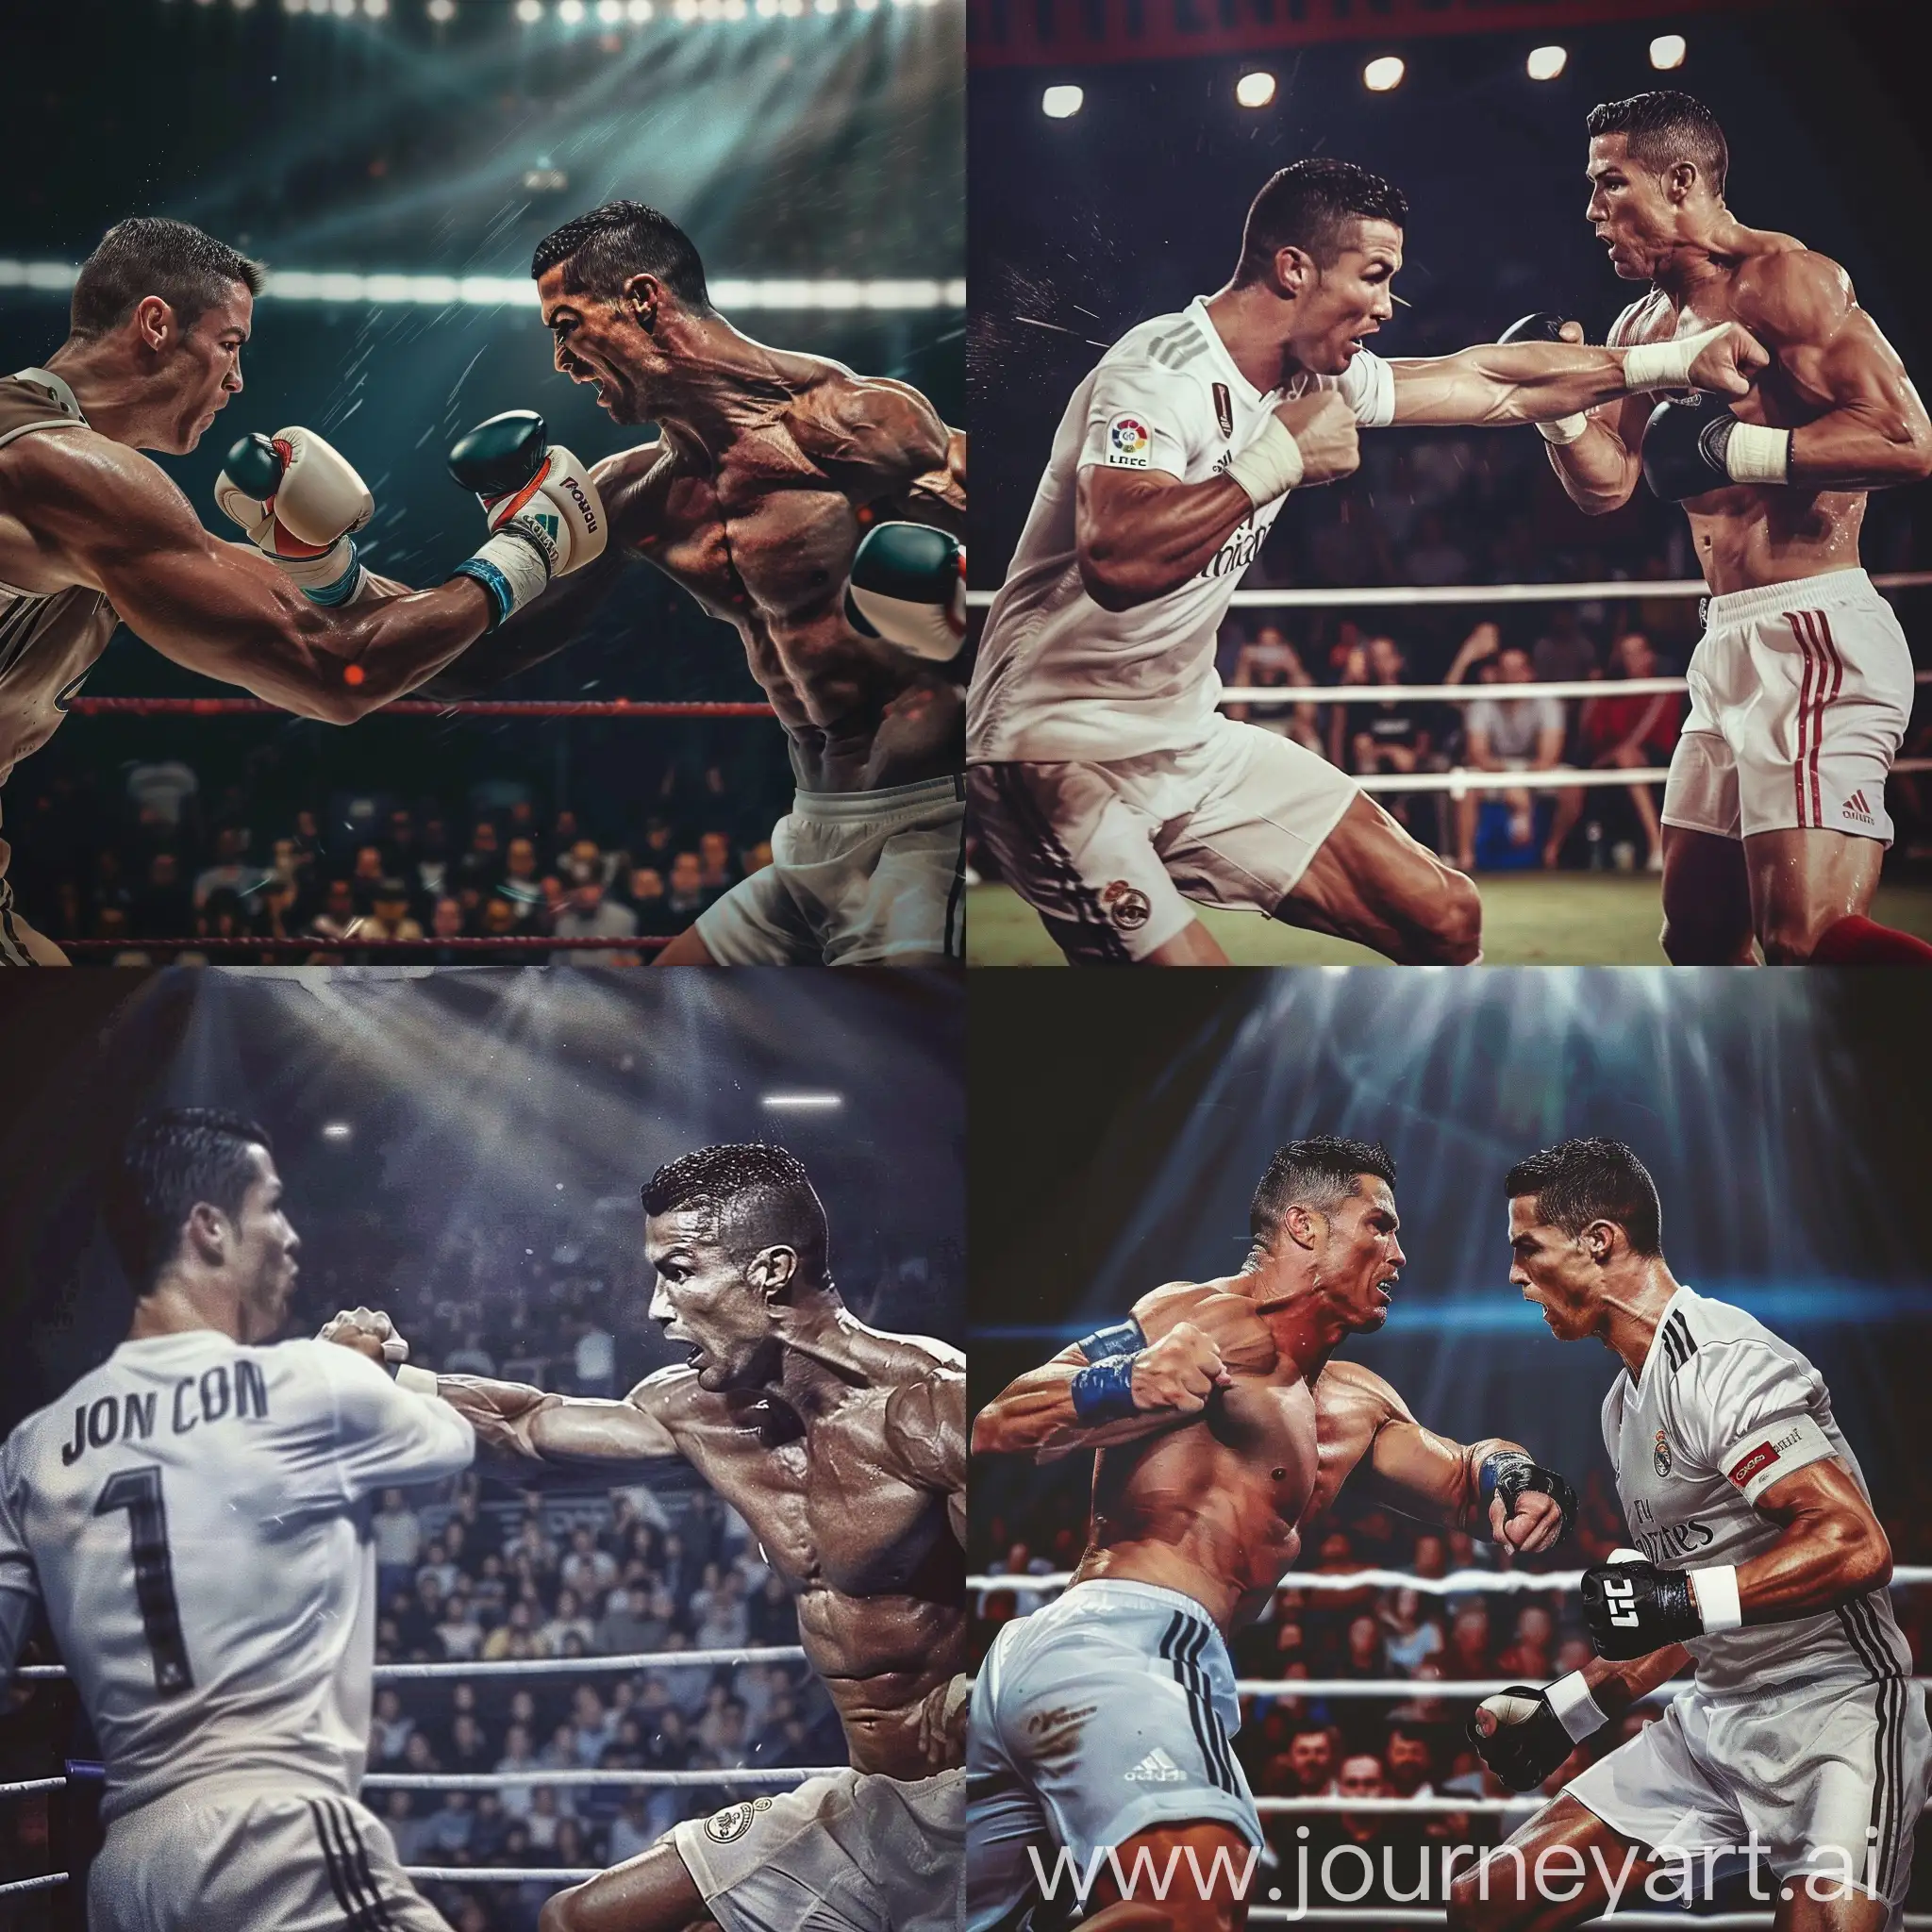 John cena punching cristiano Ronaldo in a 1v1 match in a ring